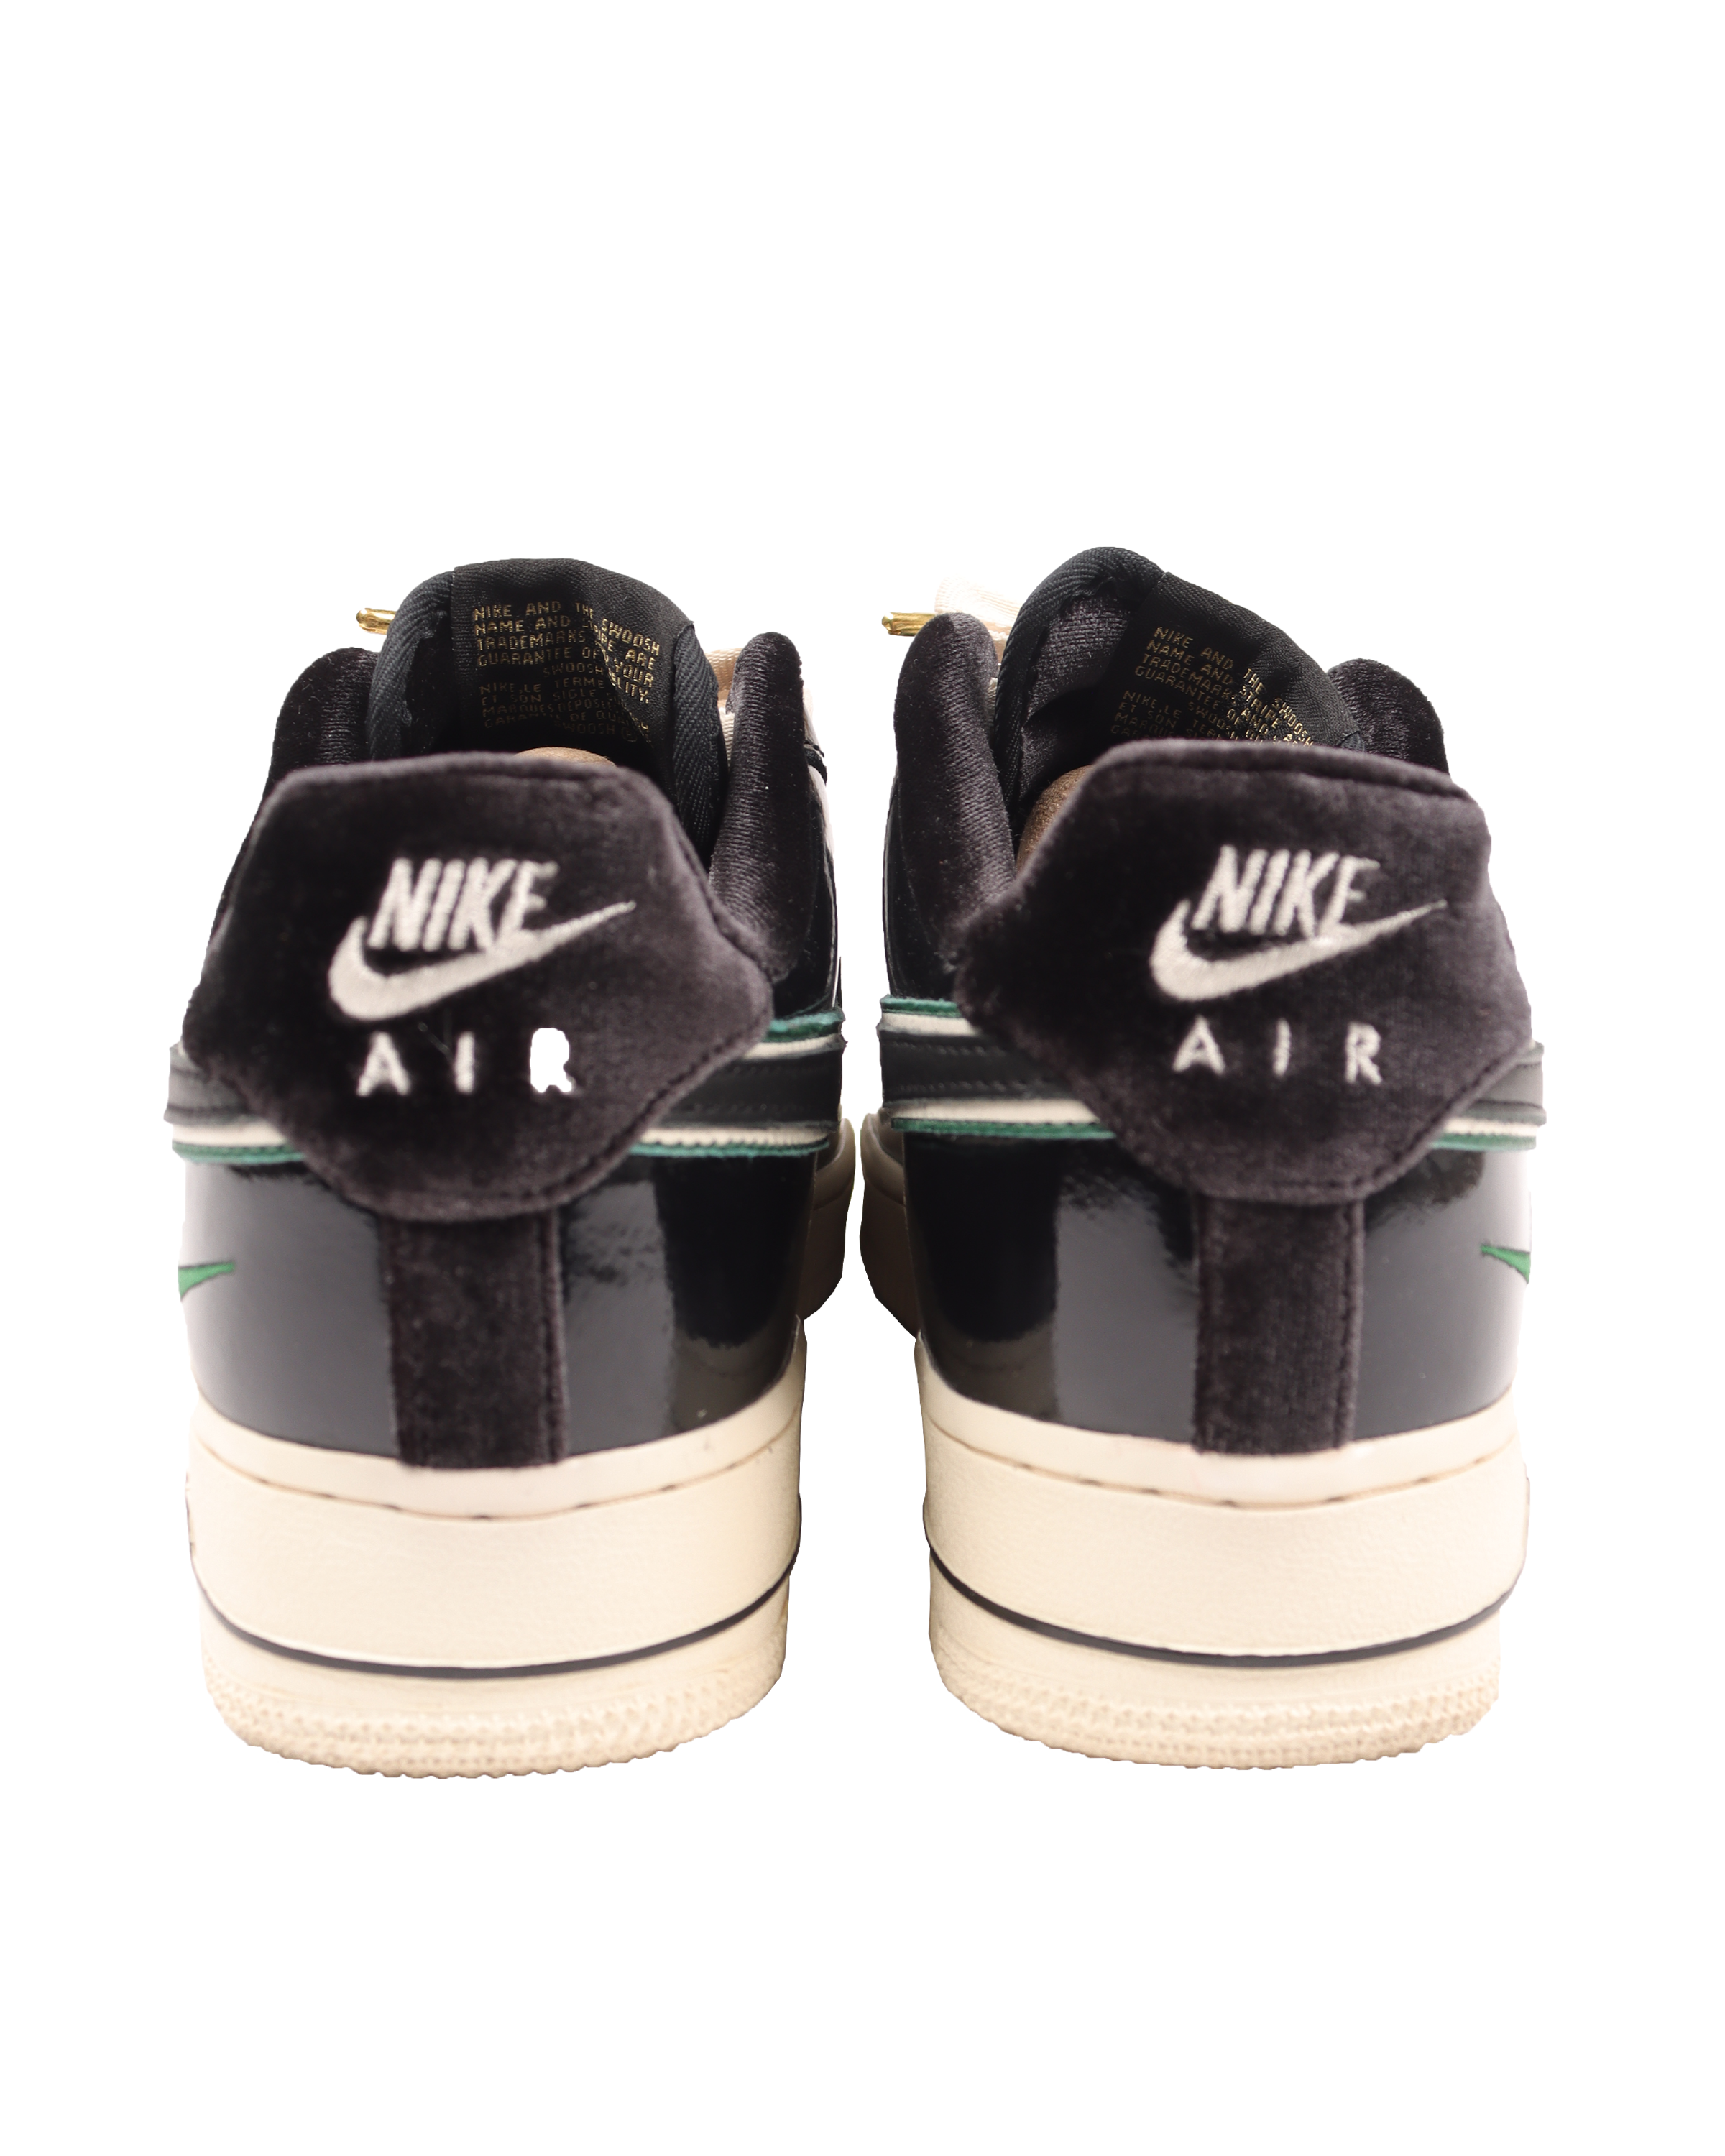 Nigel Sylvester x Nike Air Force 1 ID Release Info - JustFreshKicks